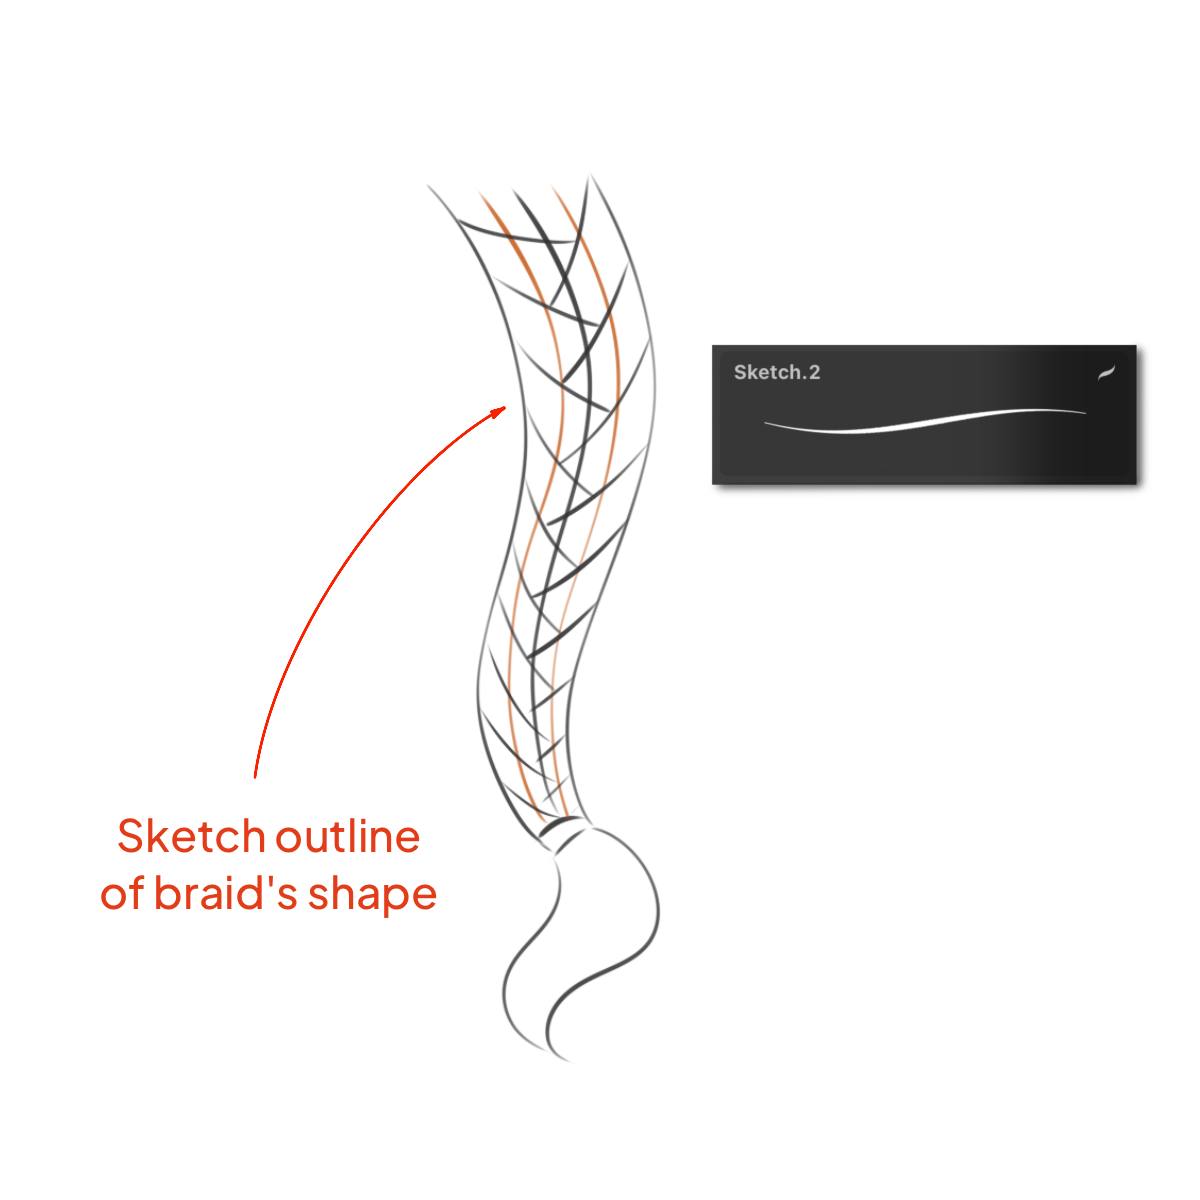 A braid hair sketch drawn in the Procreate application